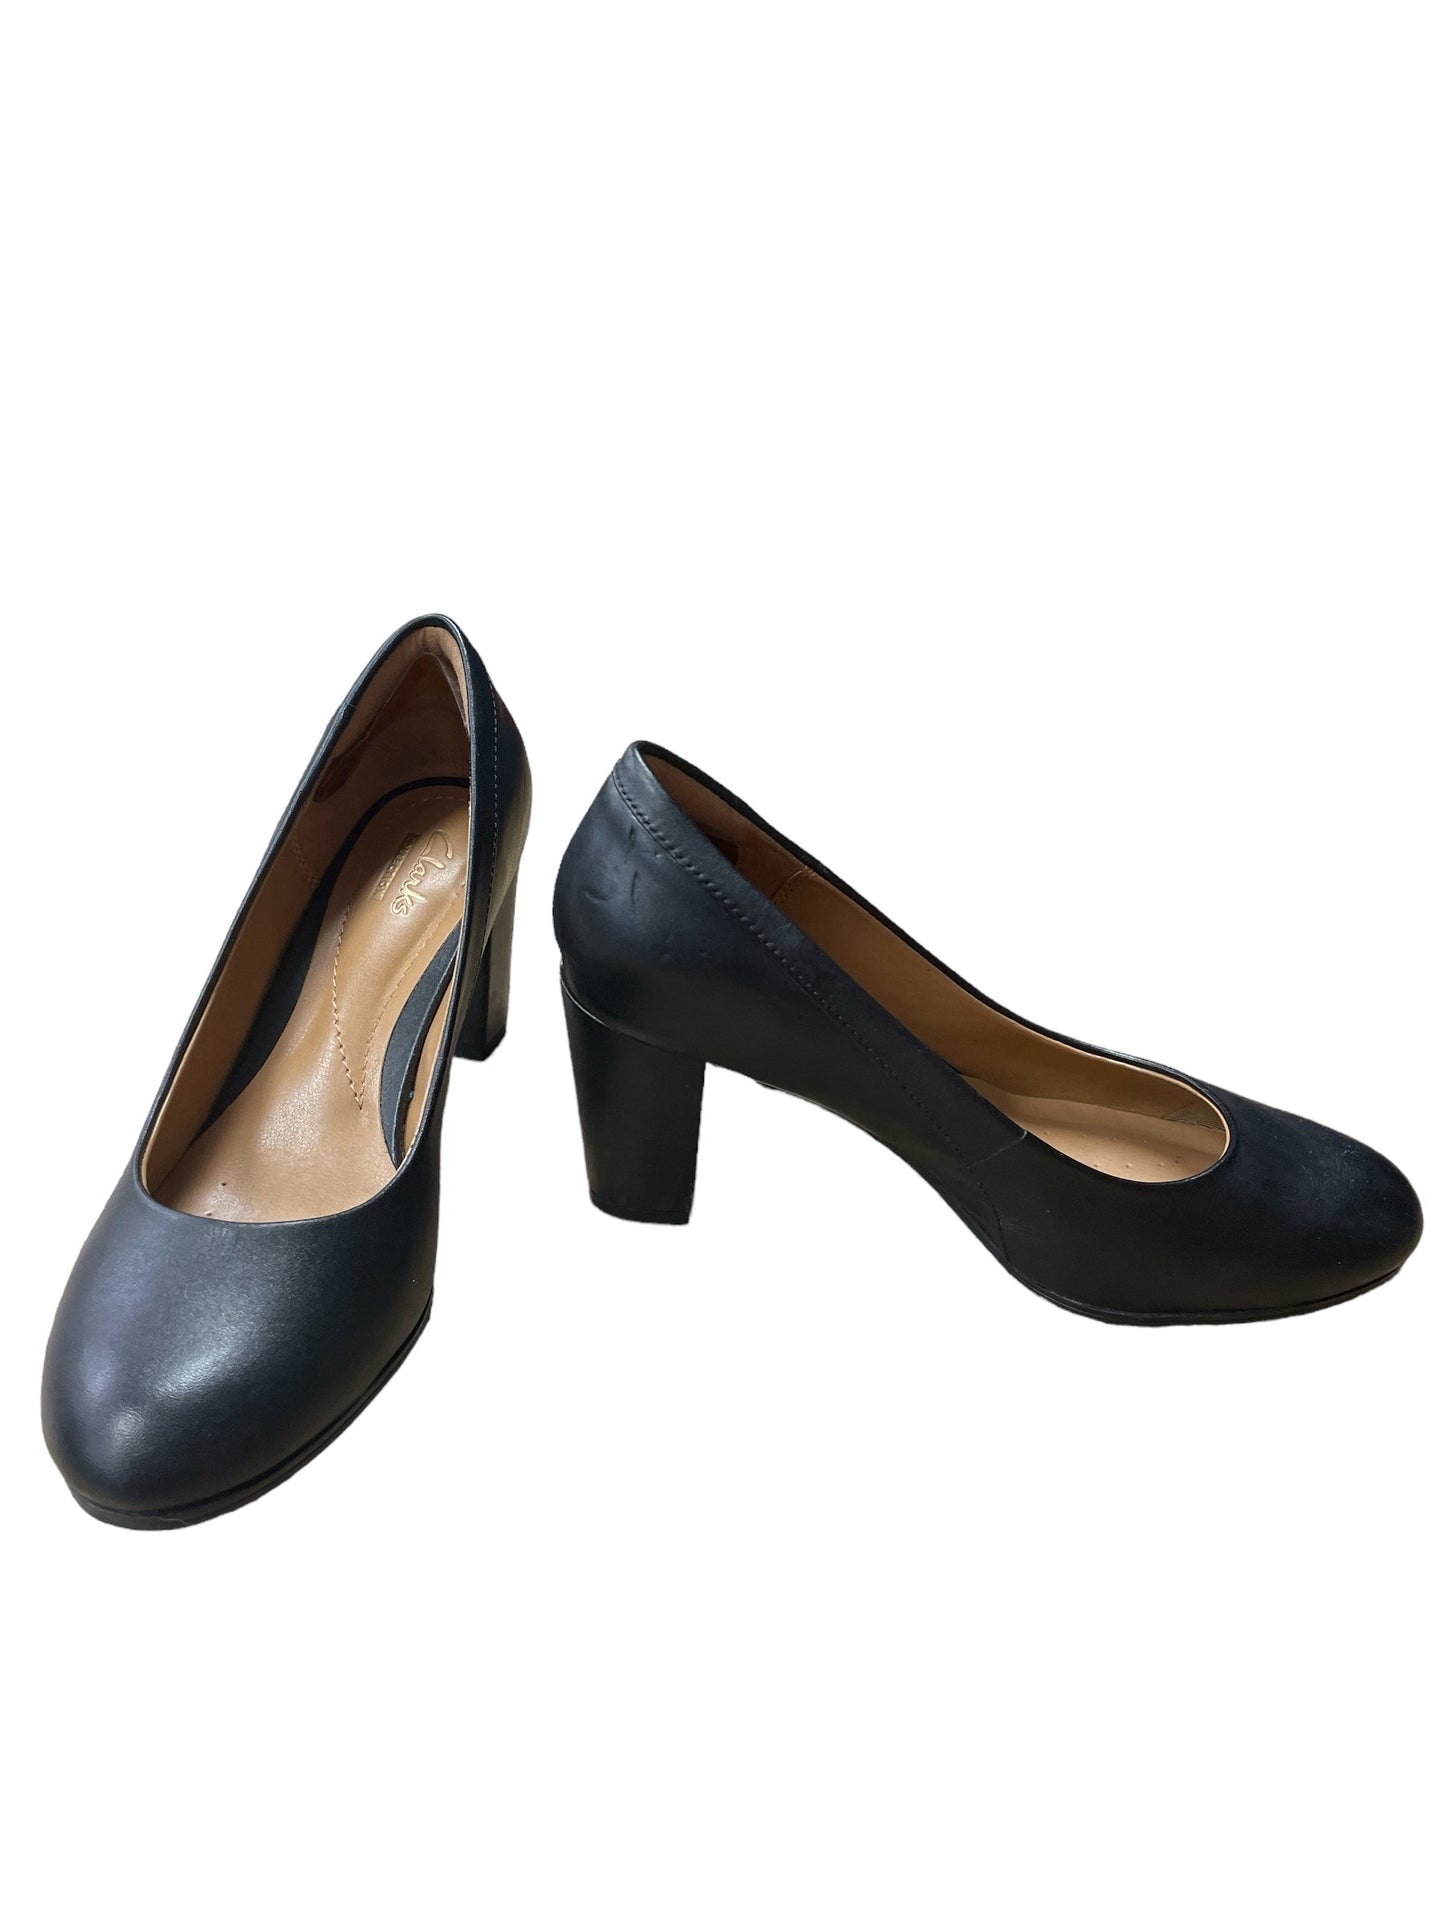 Black Shoes Heels Block Clarks, Size 6.5